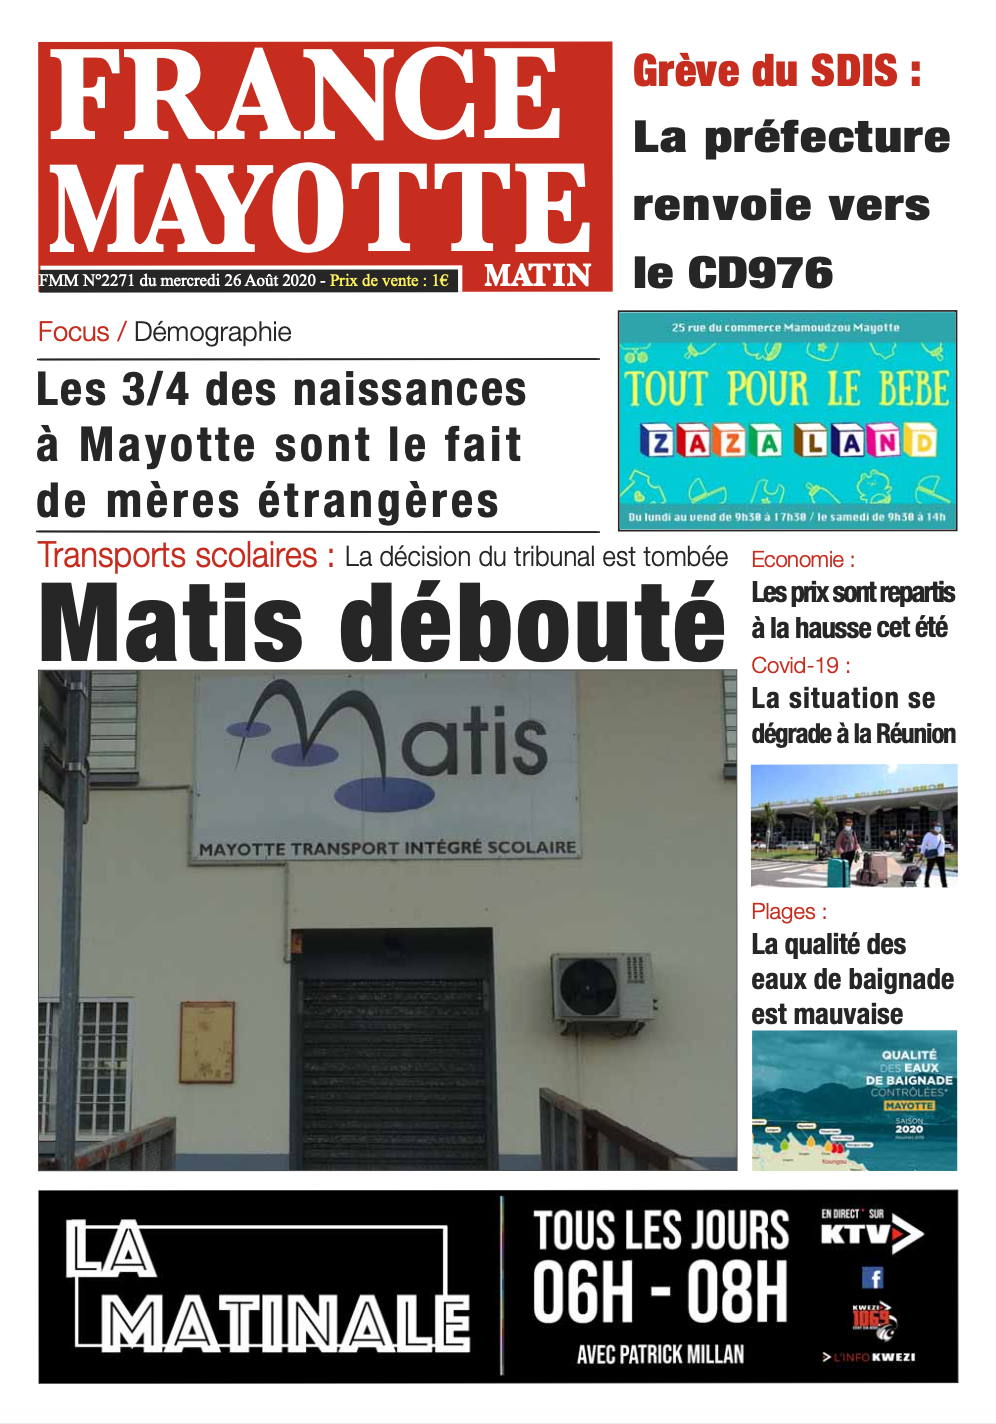 France Mayotte Mercredi 26 août 2020